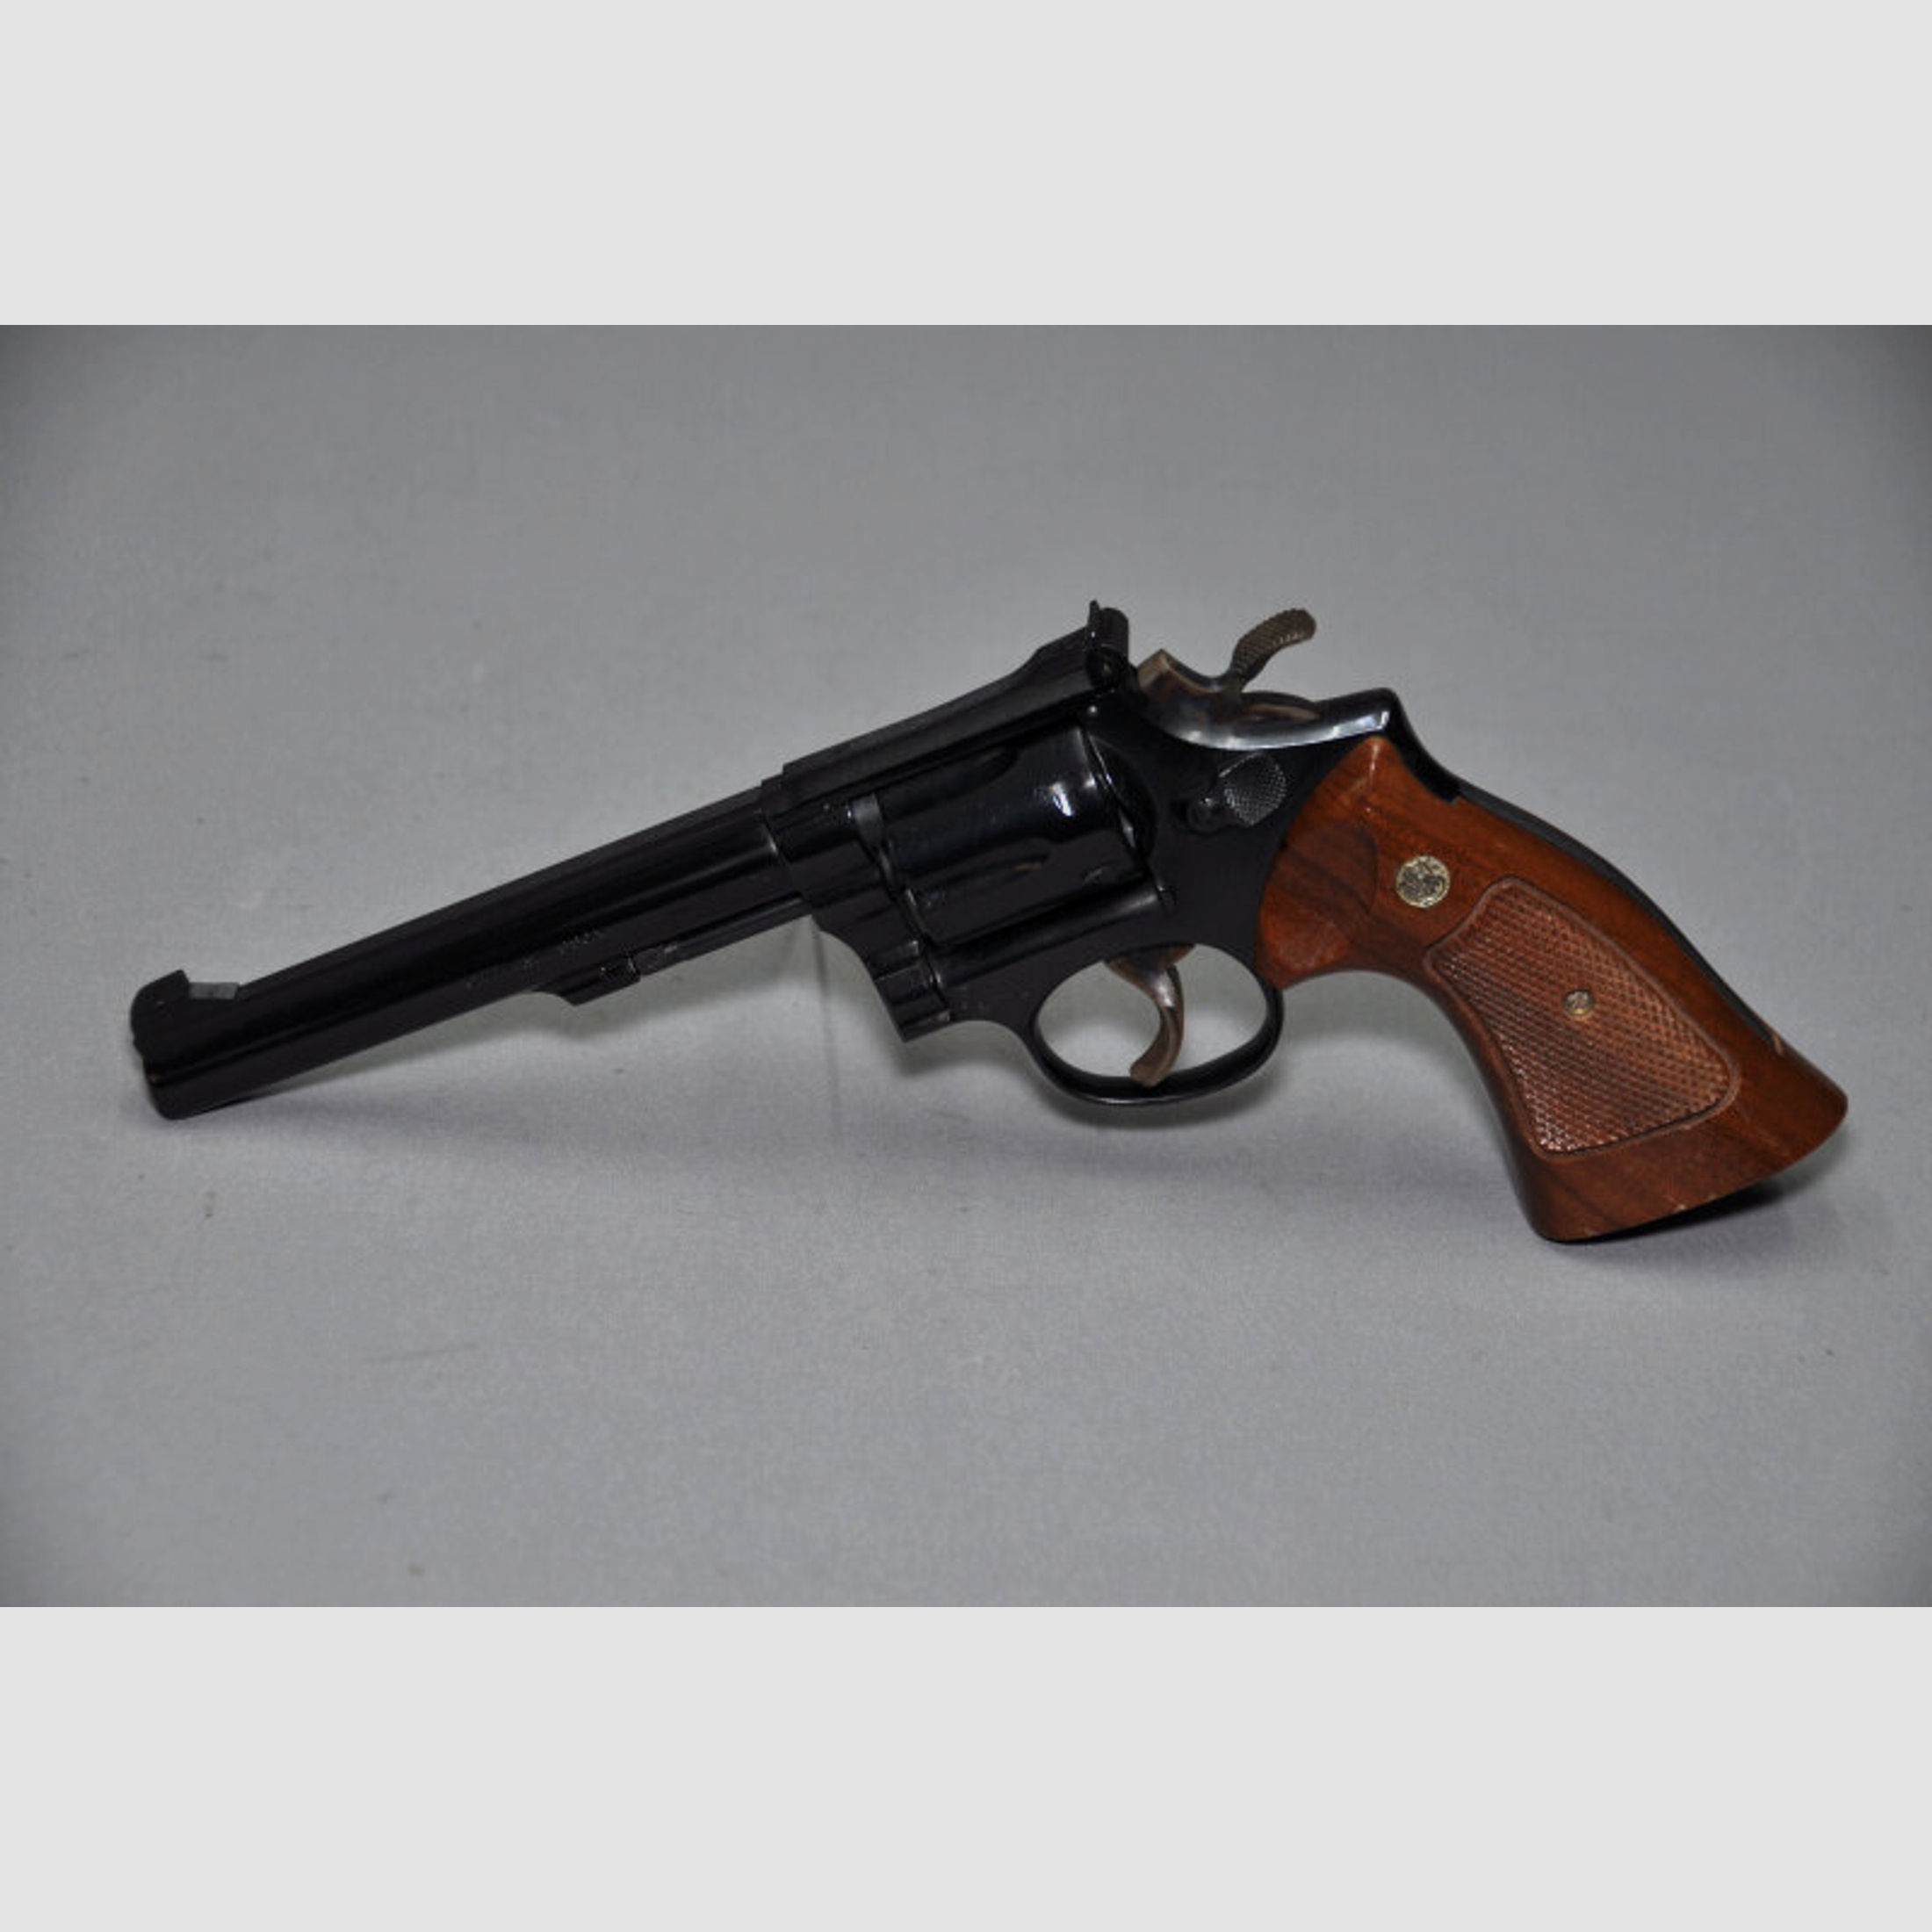 Revolver Smith & Wesson "Mod.17-3" - 6" - Kaliber: .22lr